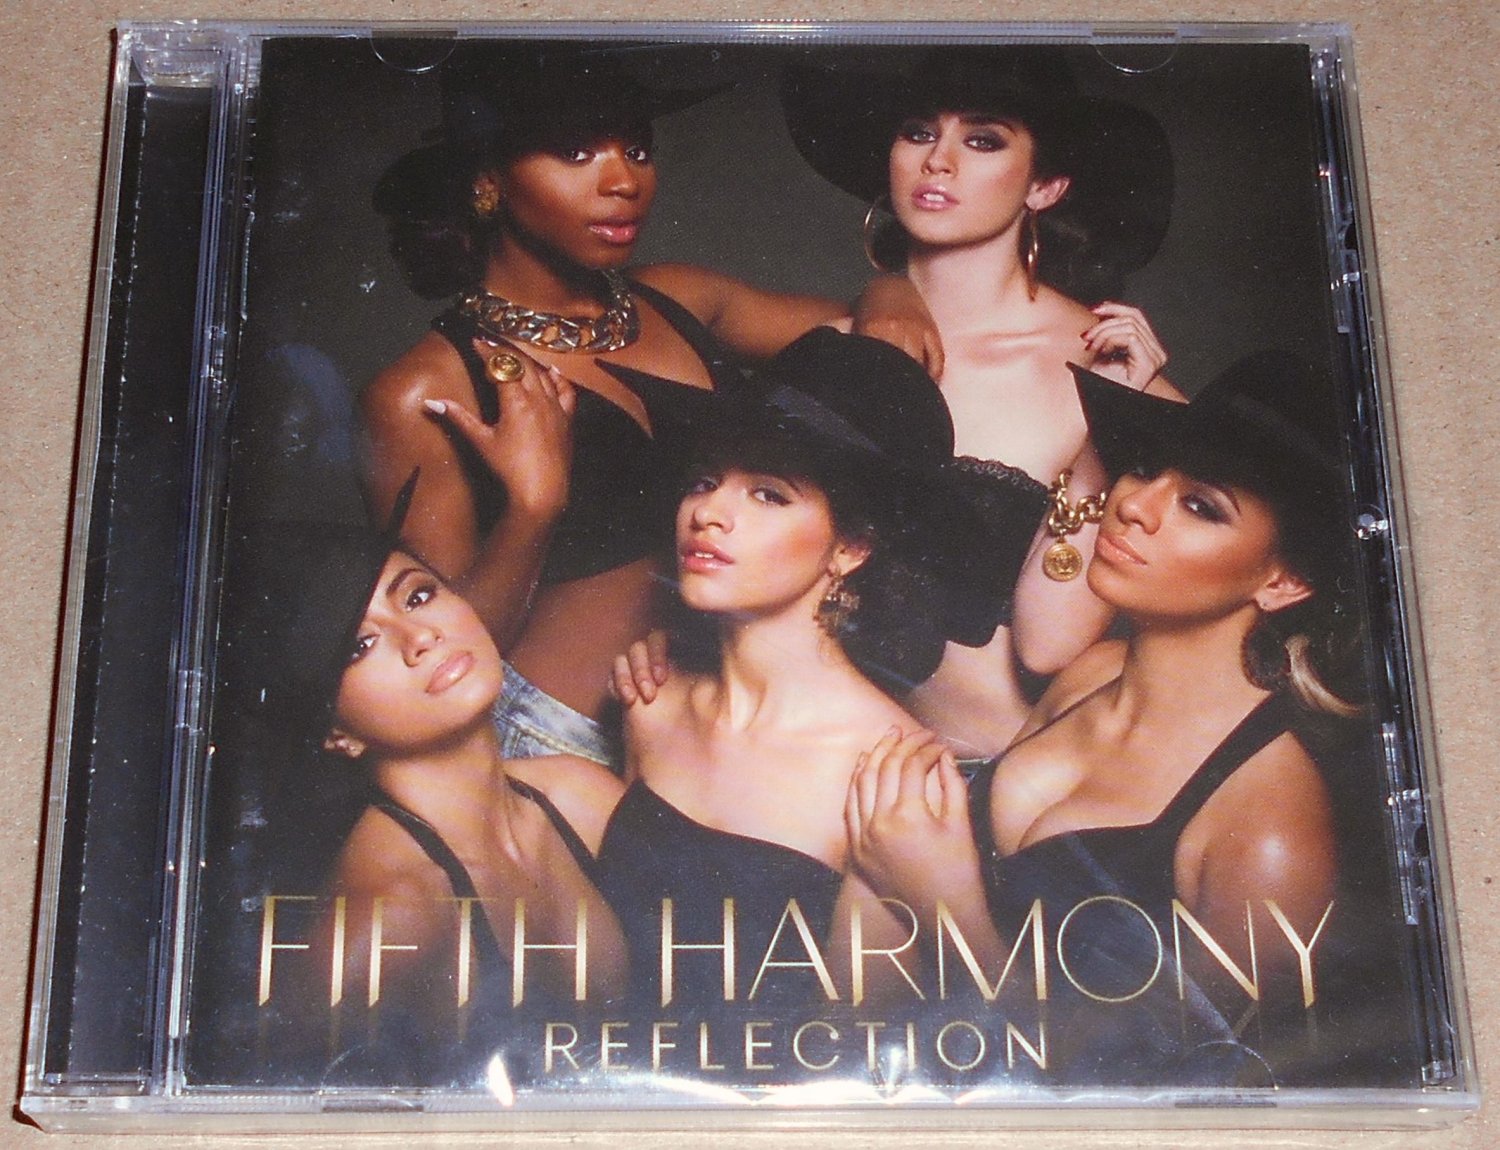 Fifth Harmony Reflection Deluxe CD New Camila Cabello Meghan Trainor Sealed 5th